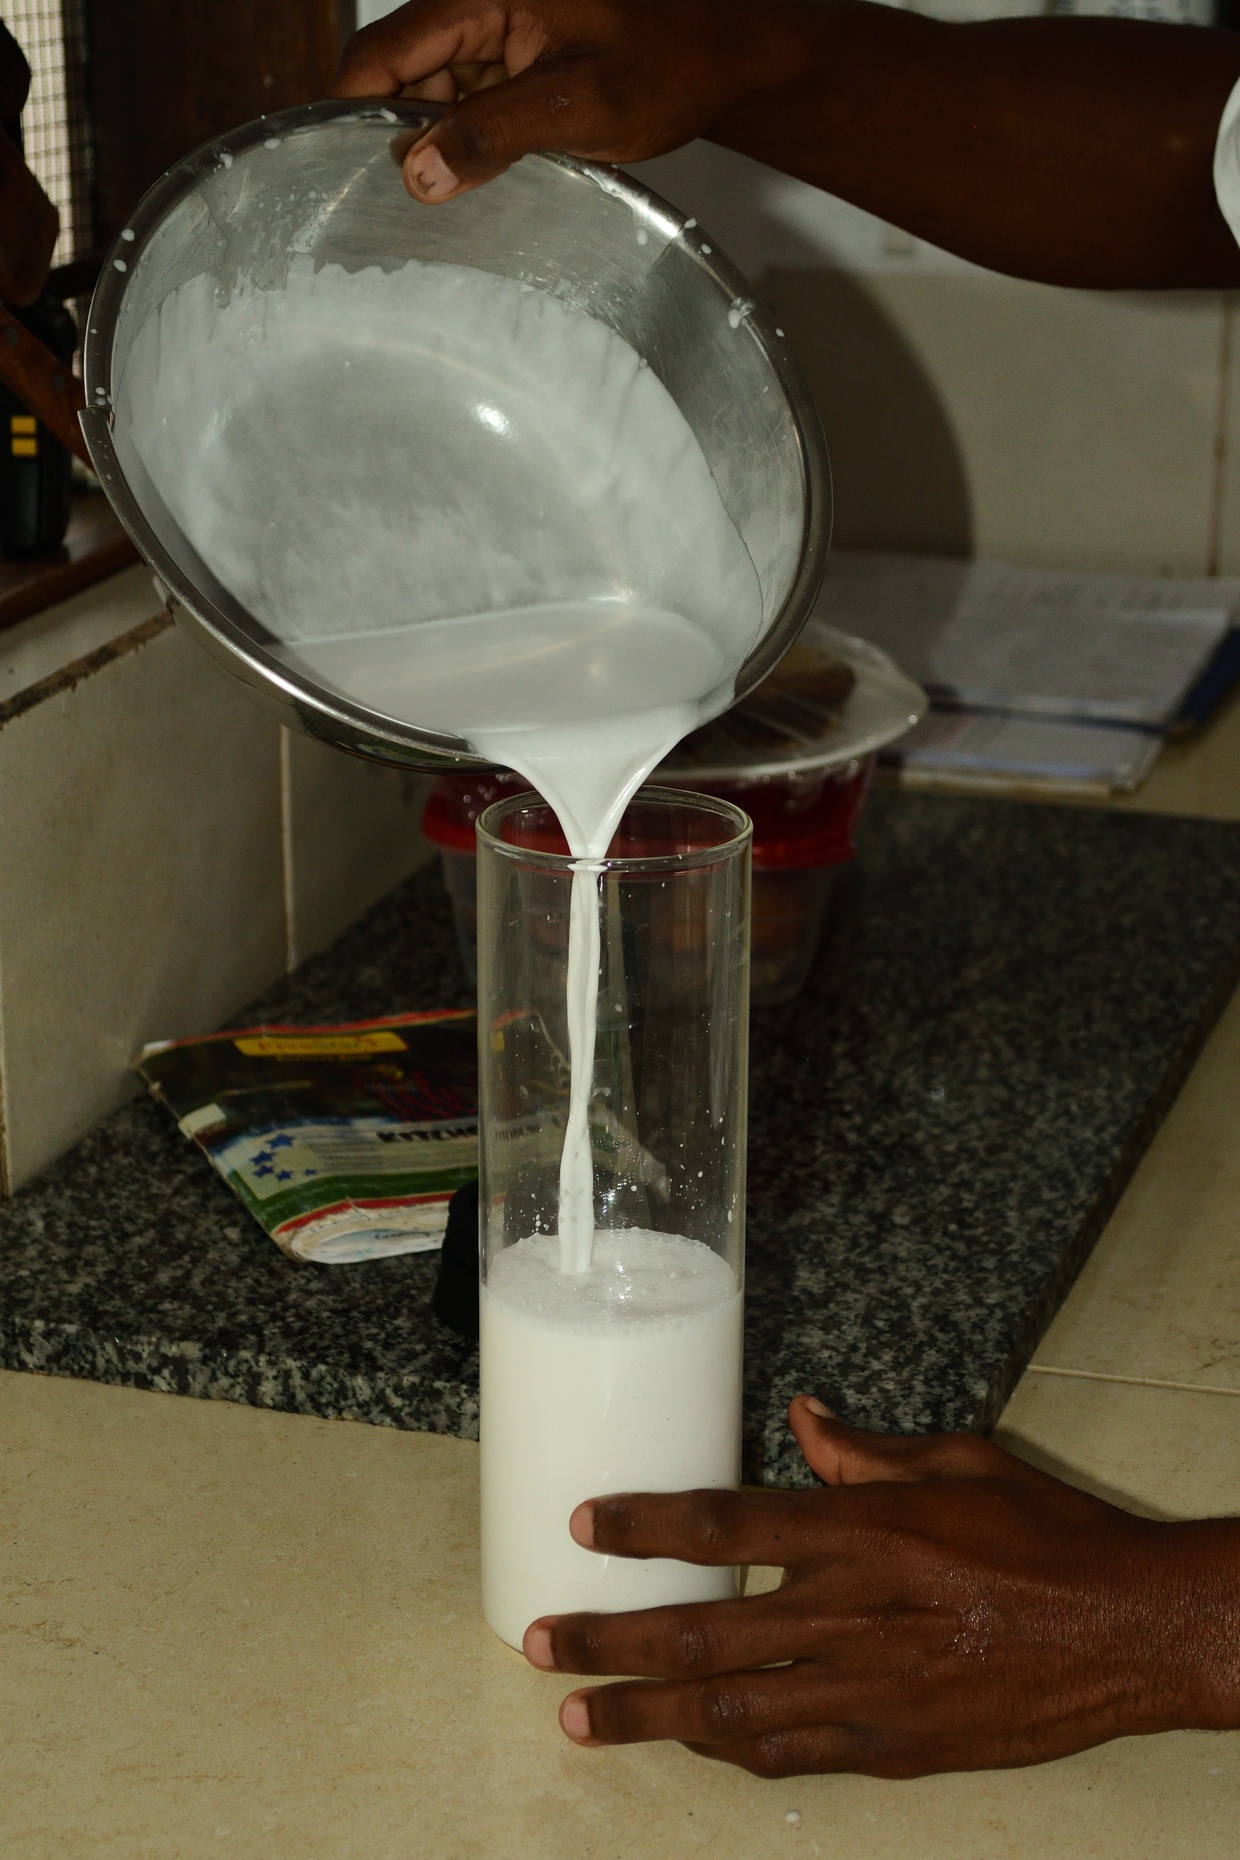 Fresh coconut milk ready to use